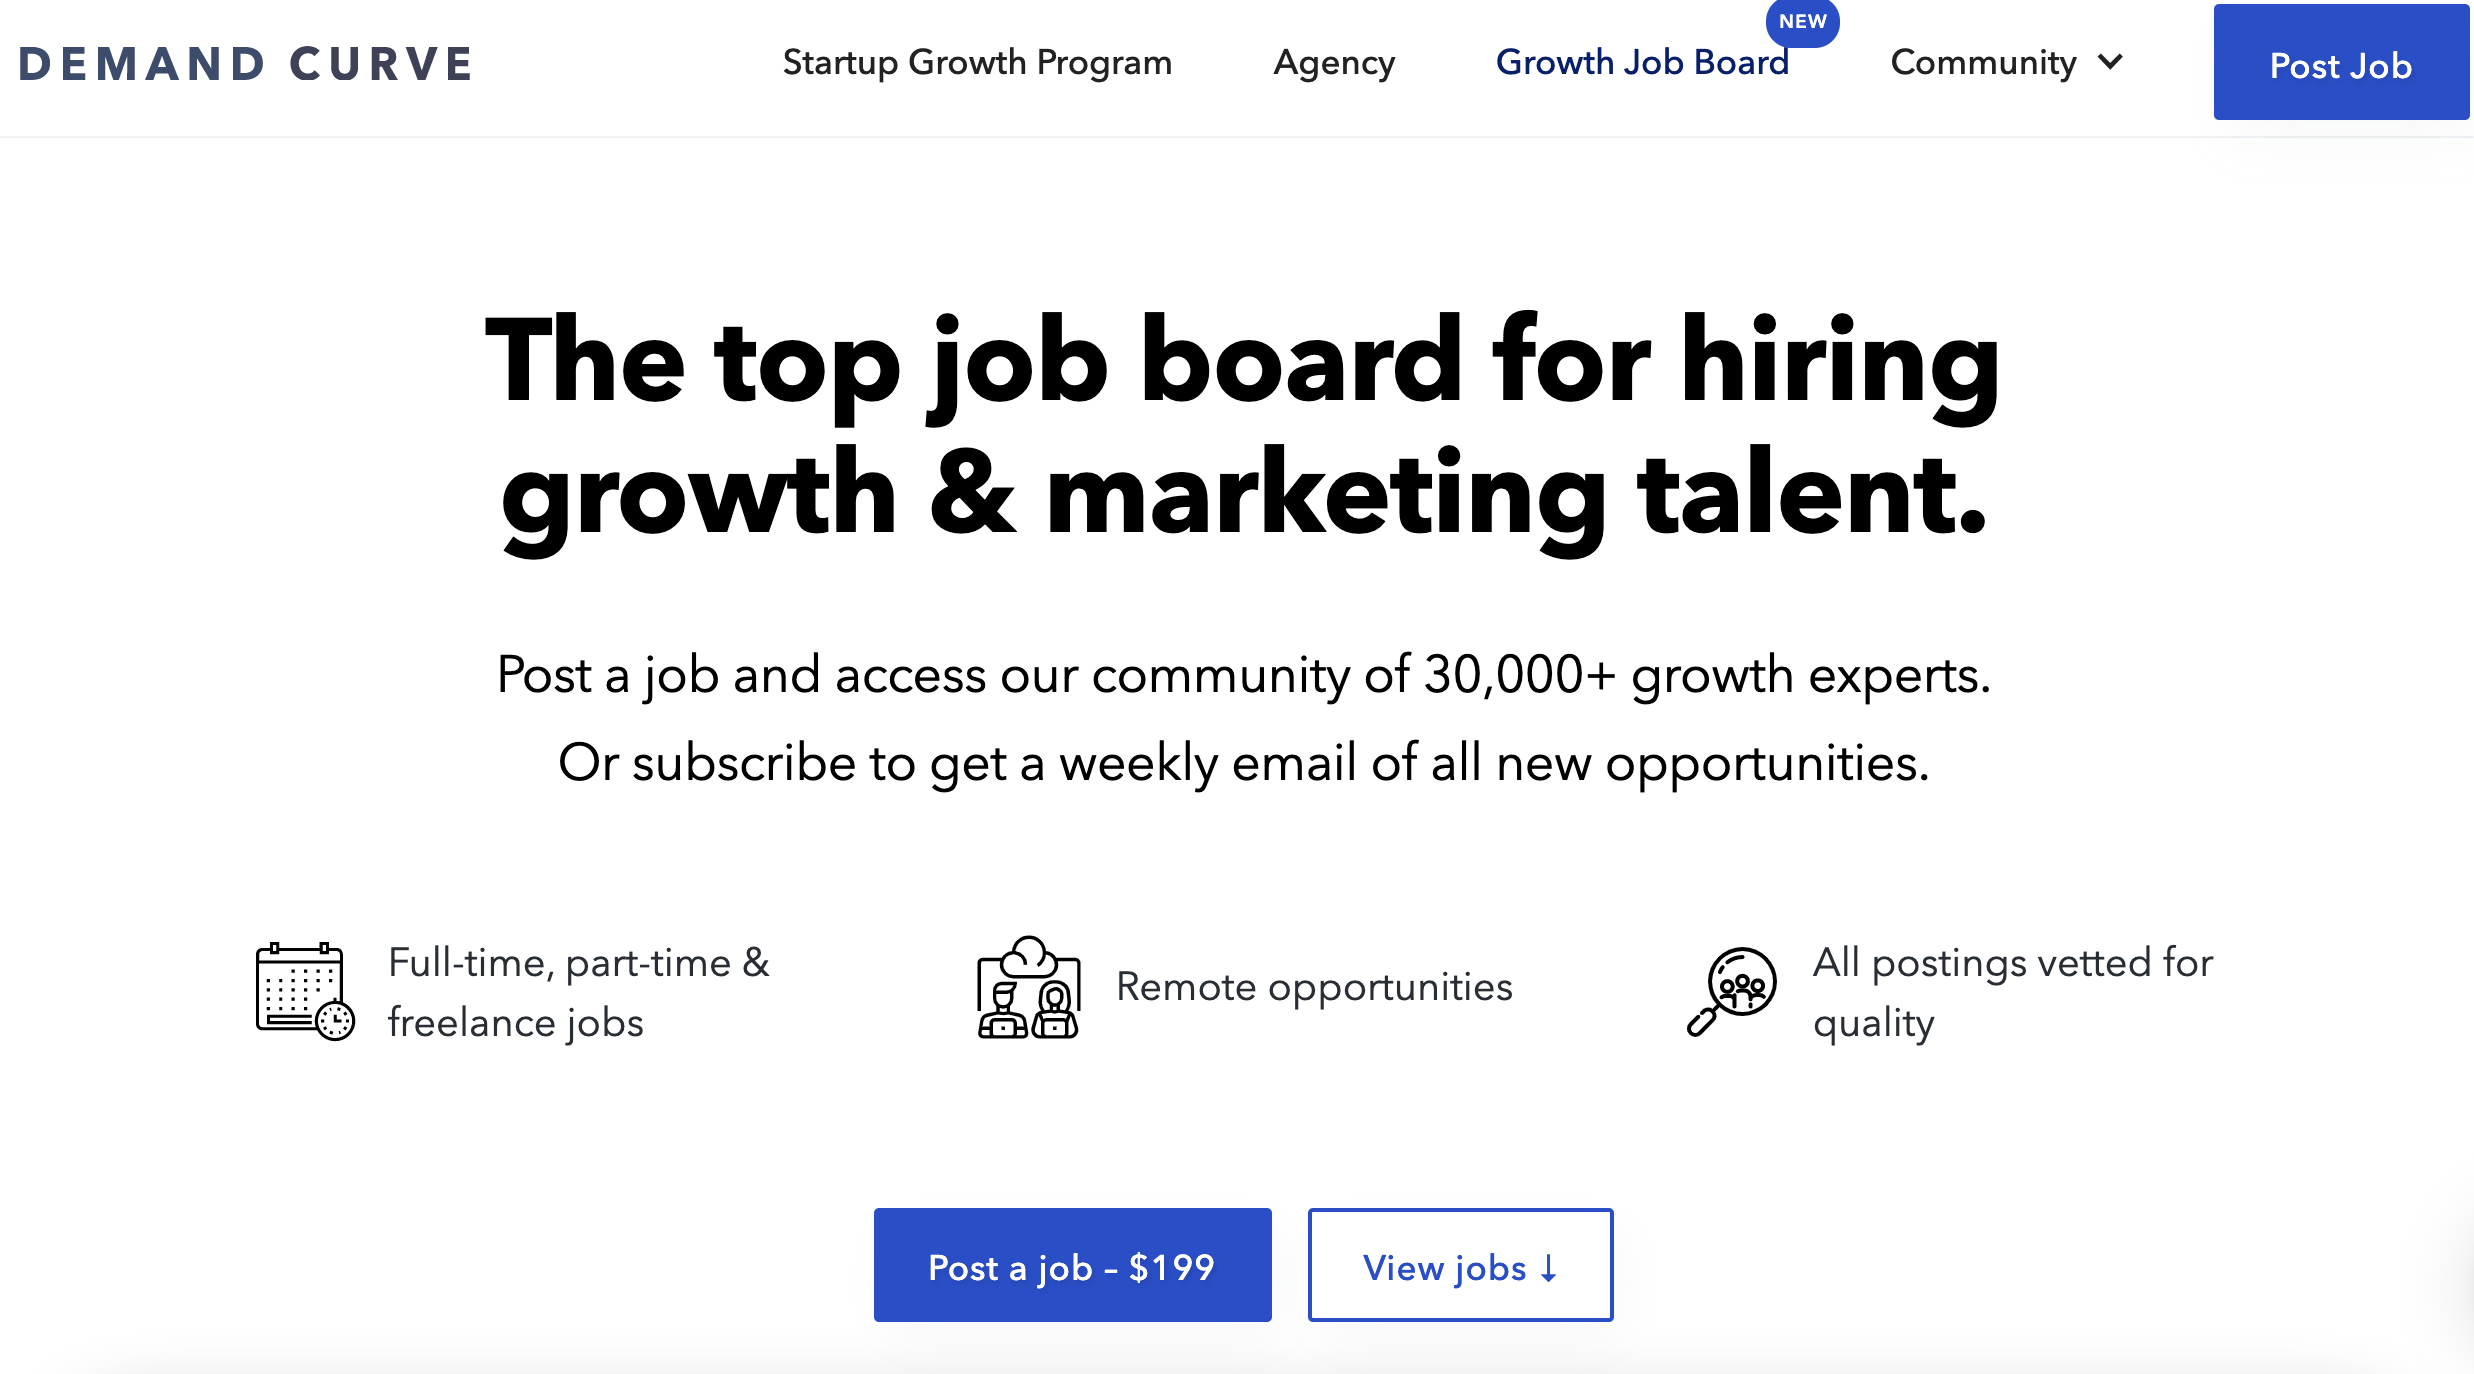 Growth Job Board – Demand Curve